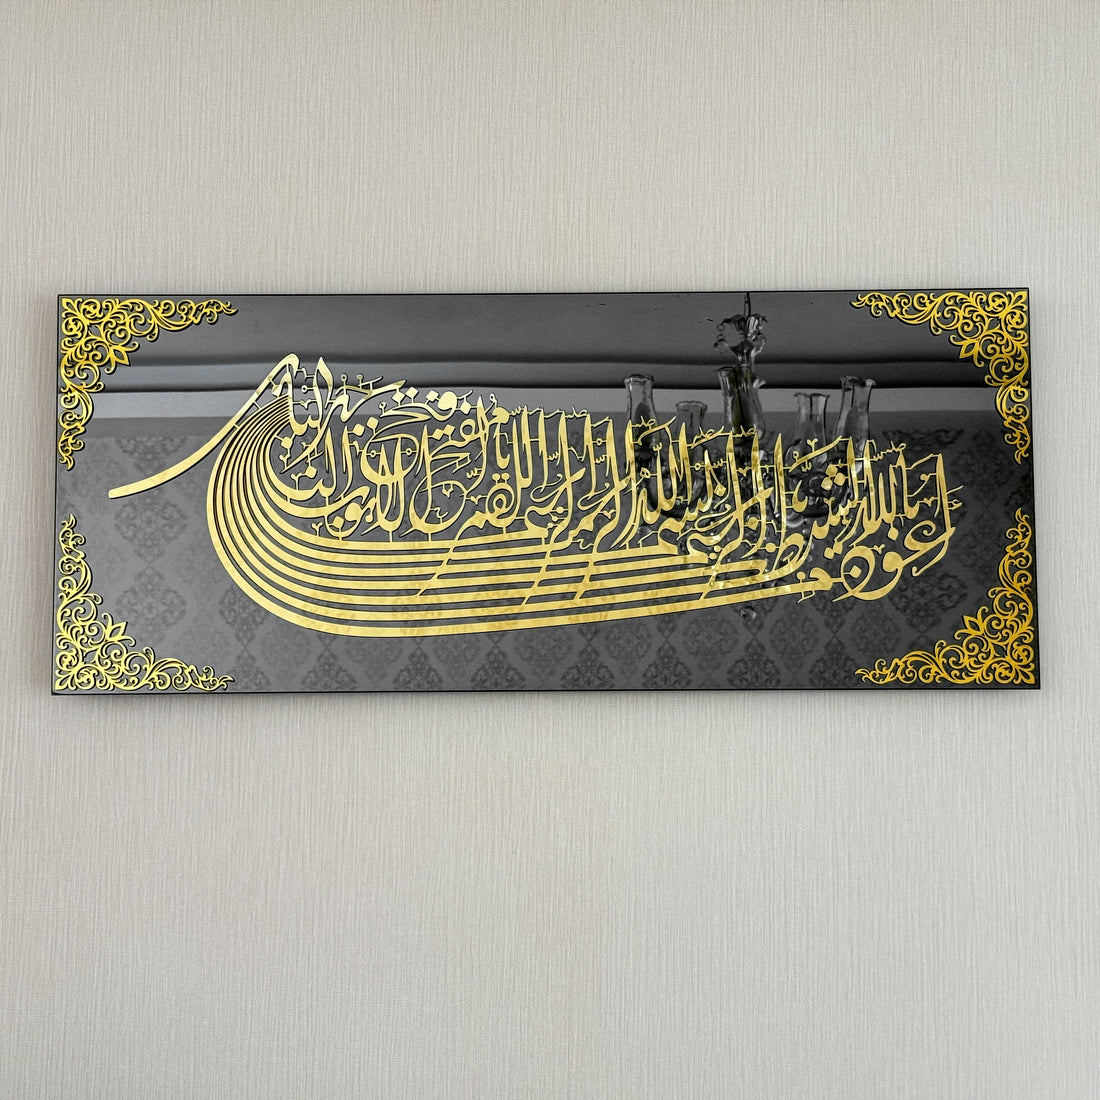 islamic-glass-euzu-basmala-glass-islamic-wall-art-ship-shaped-islamic-calligraphy-unique-design-for-walls-shukranislamicarts